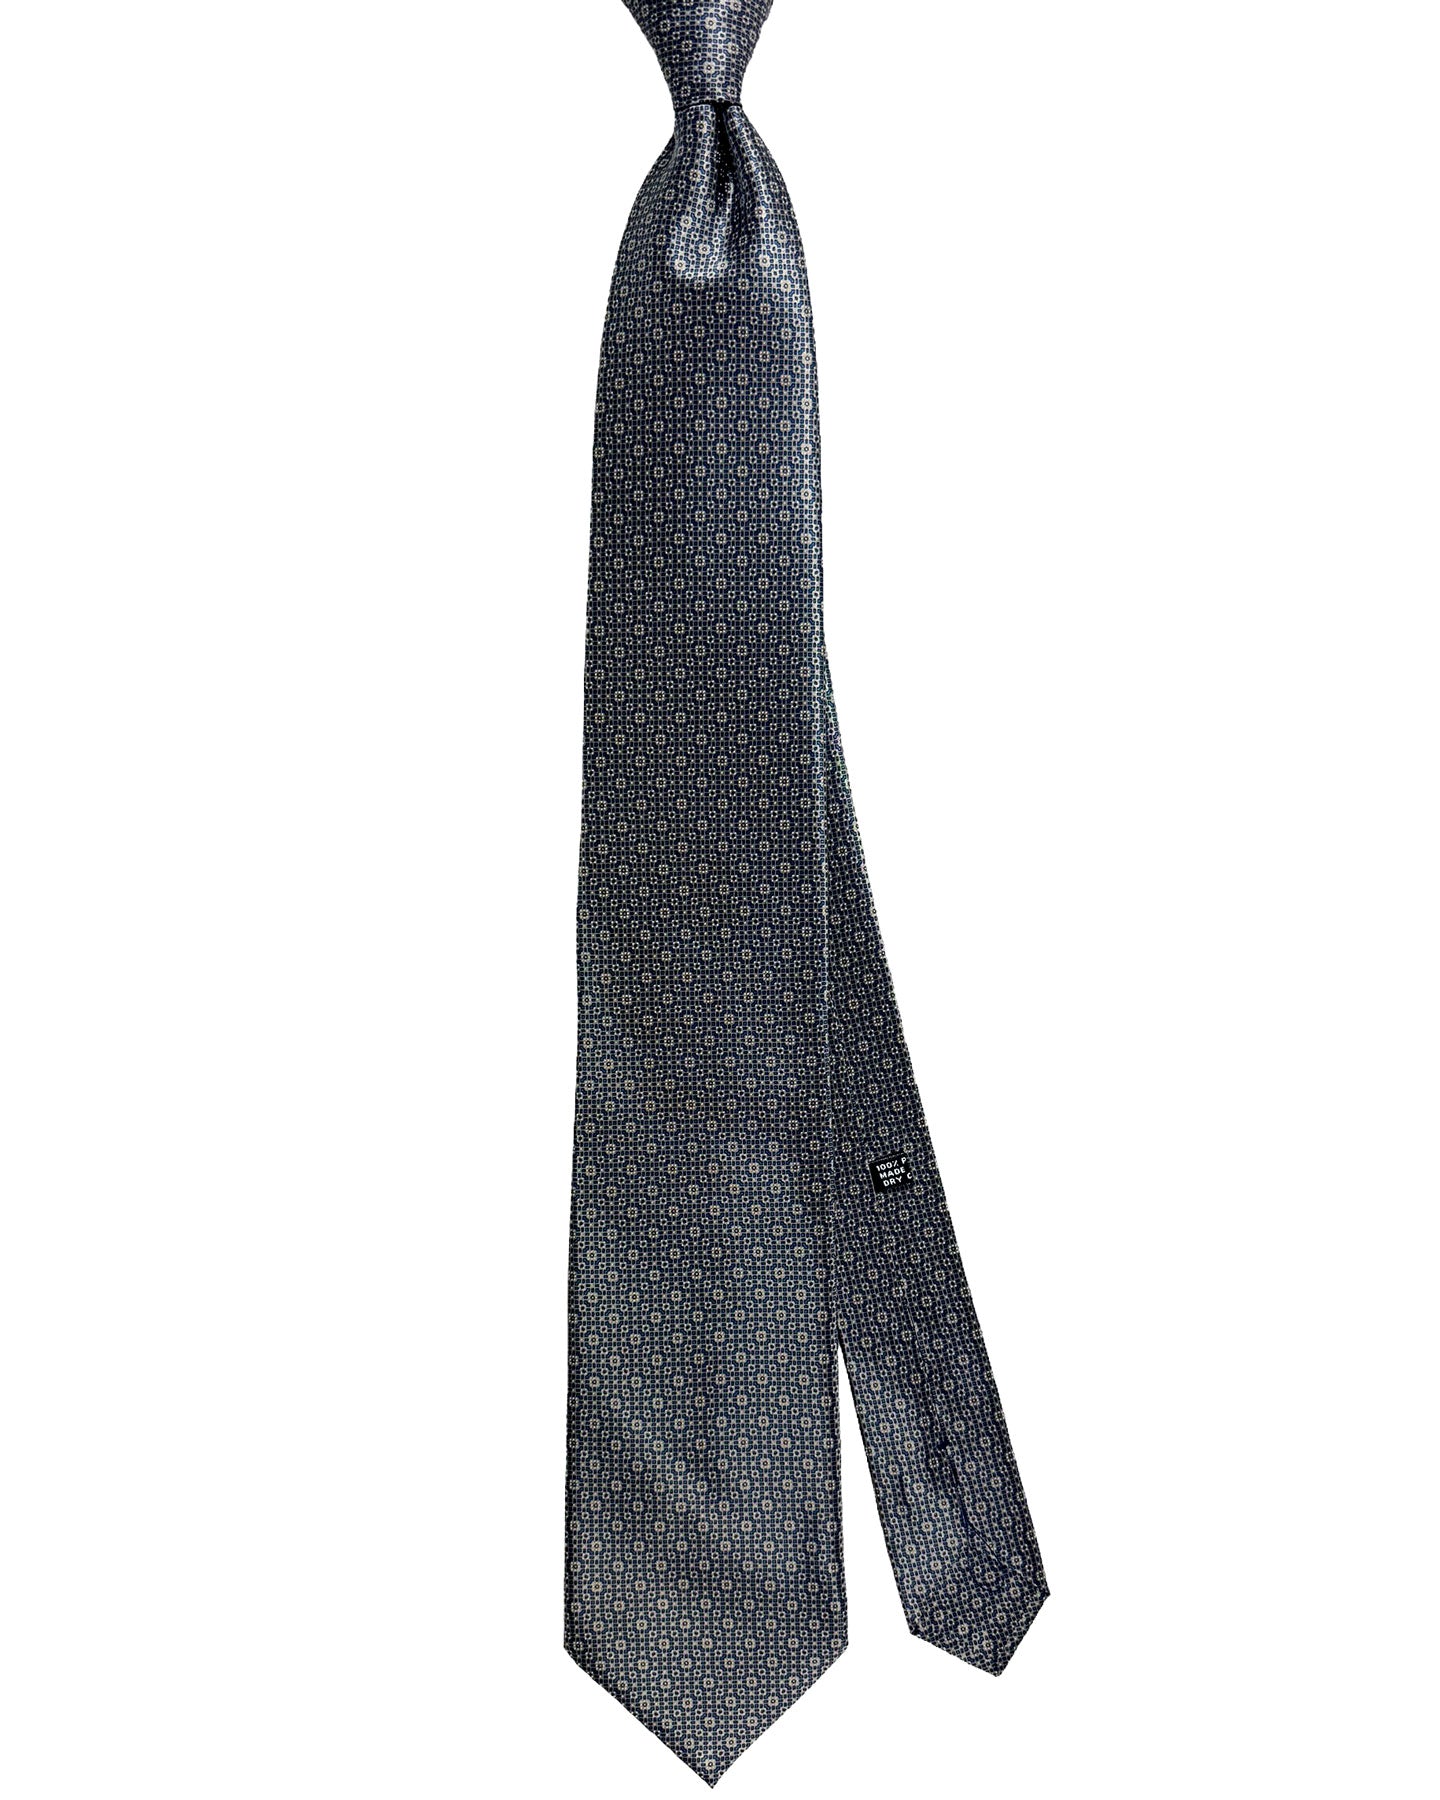 Stefano Ricci Silk Tie Taupe Gray Micro Pattern